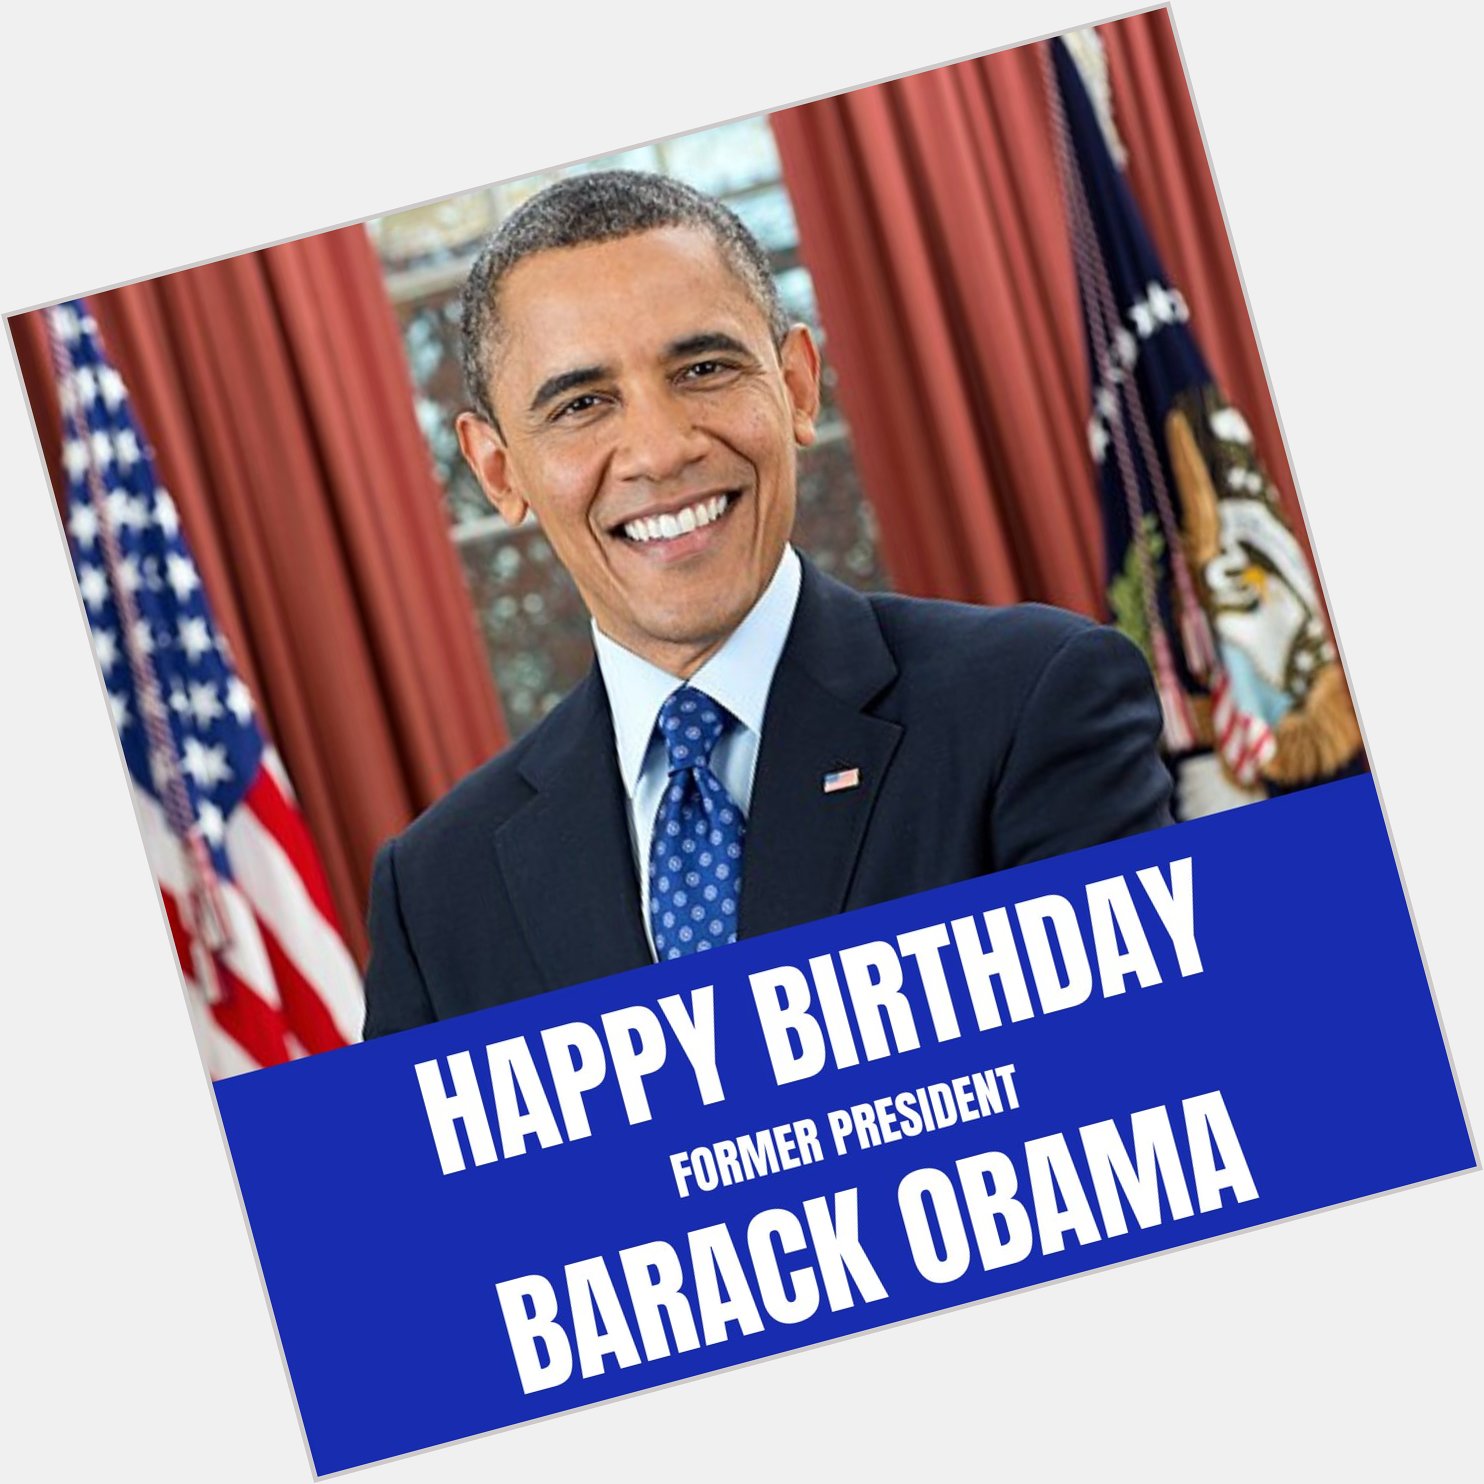 Happy birthday to Former President Barack Obama!

The 44th president is celebrating his 60th birthday today! 